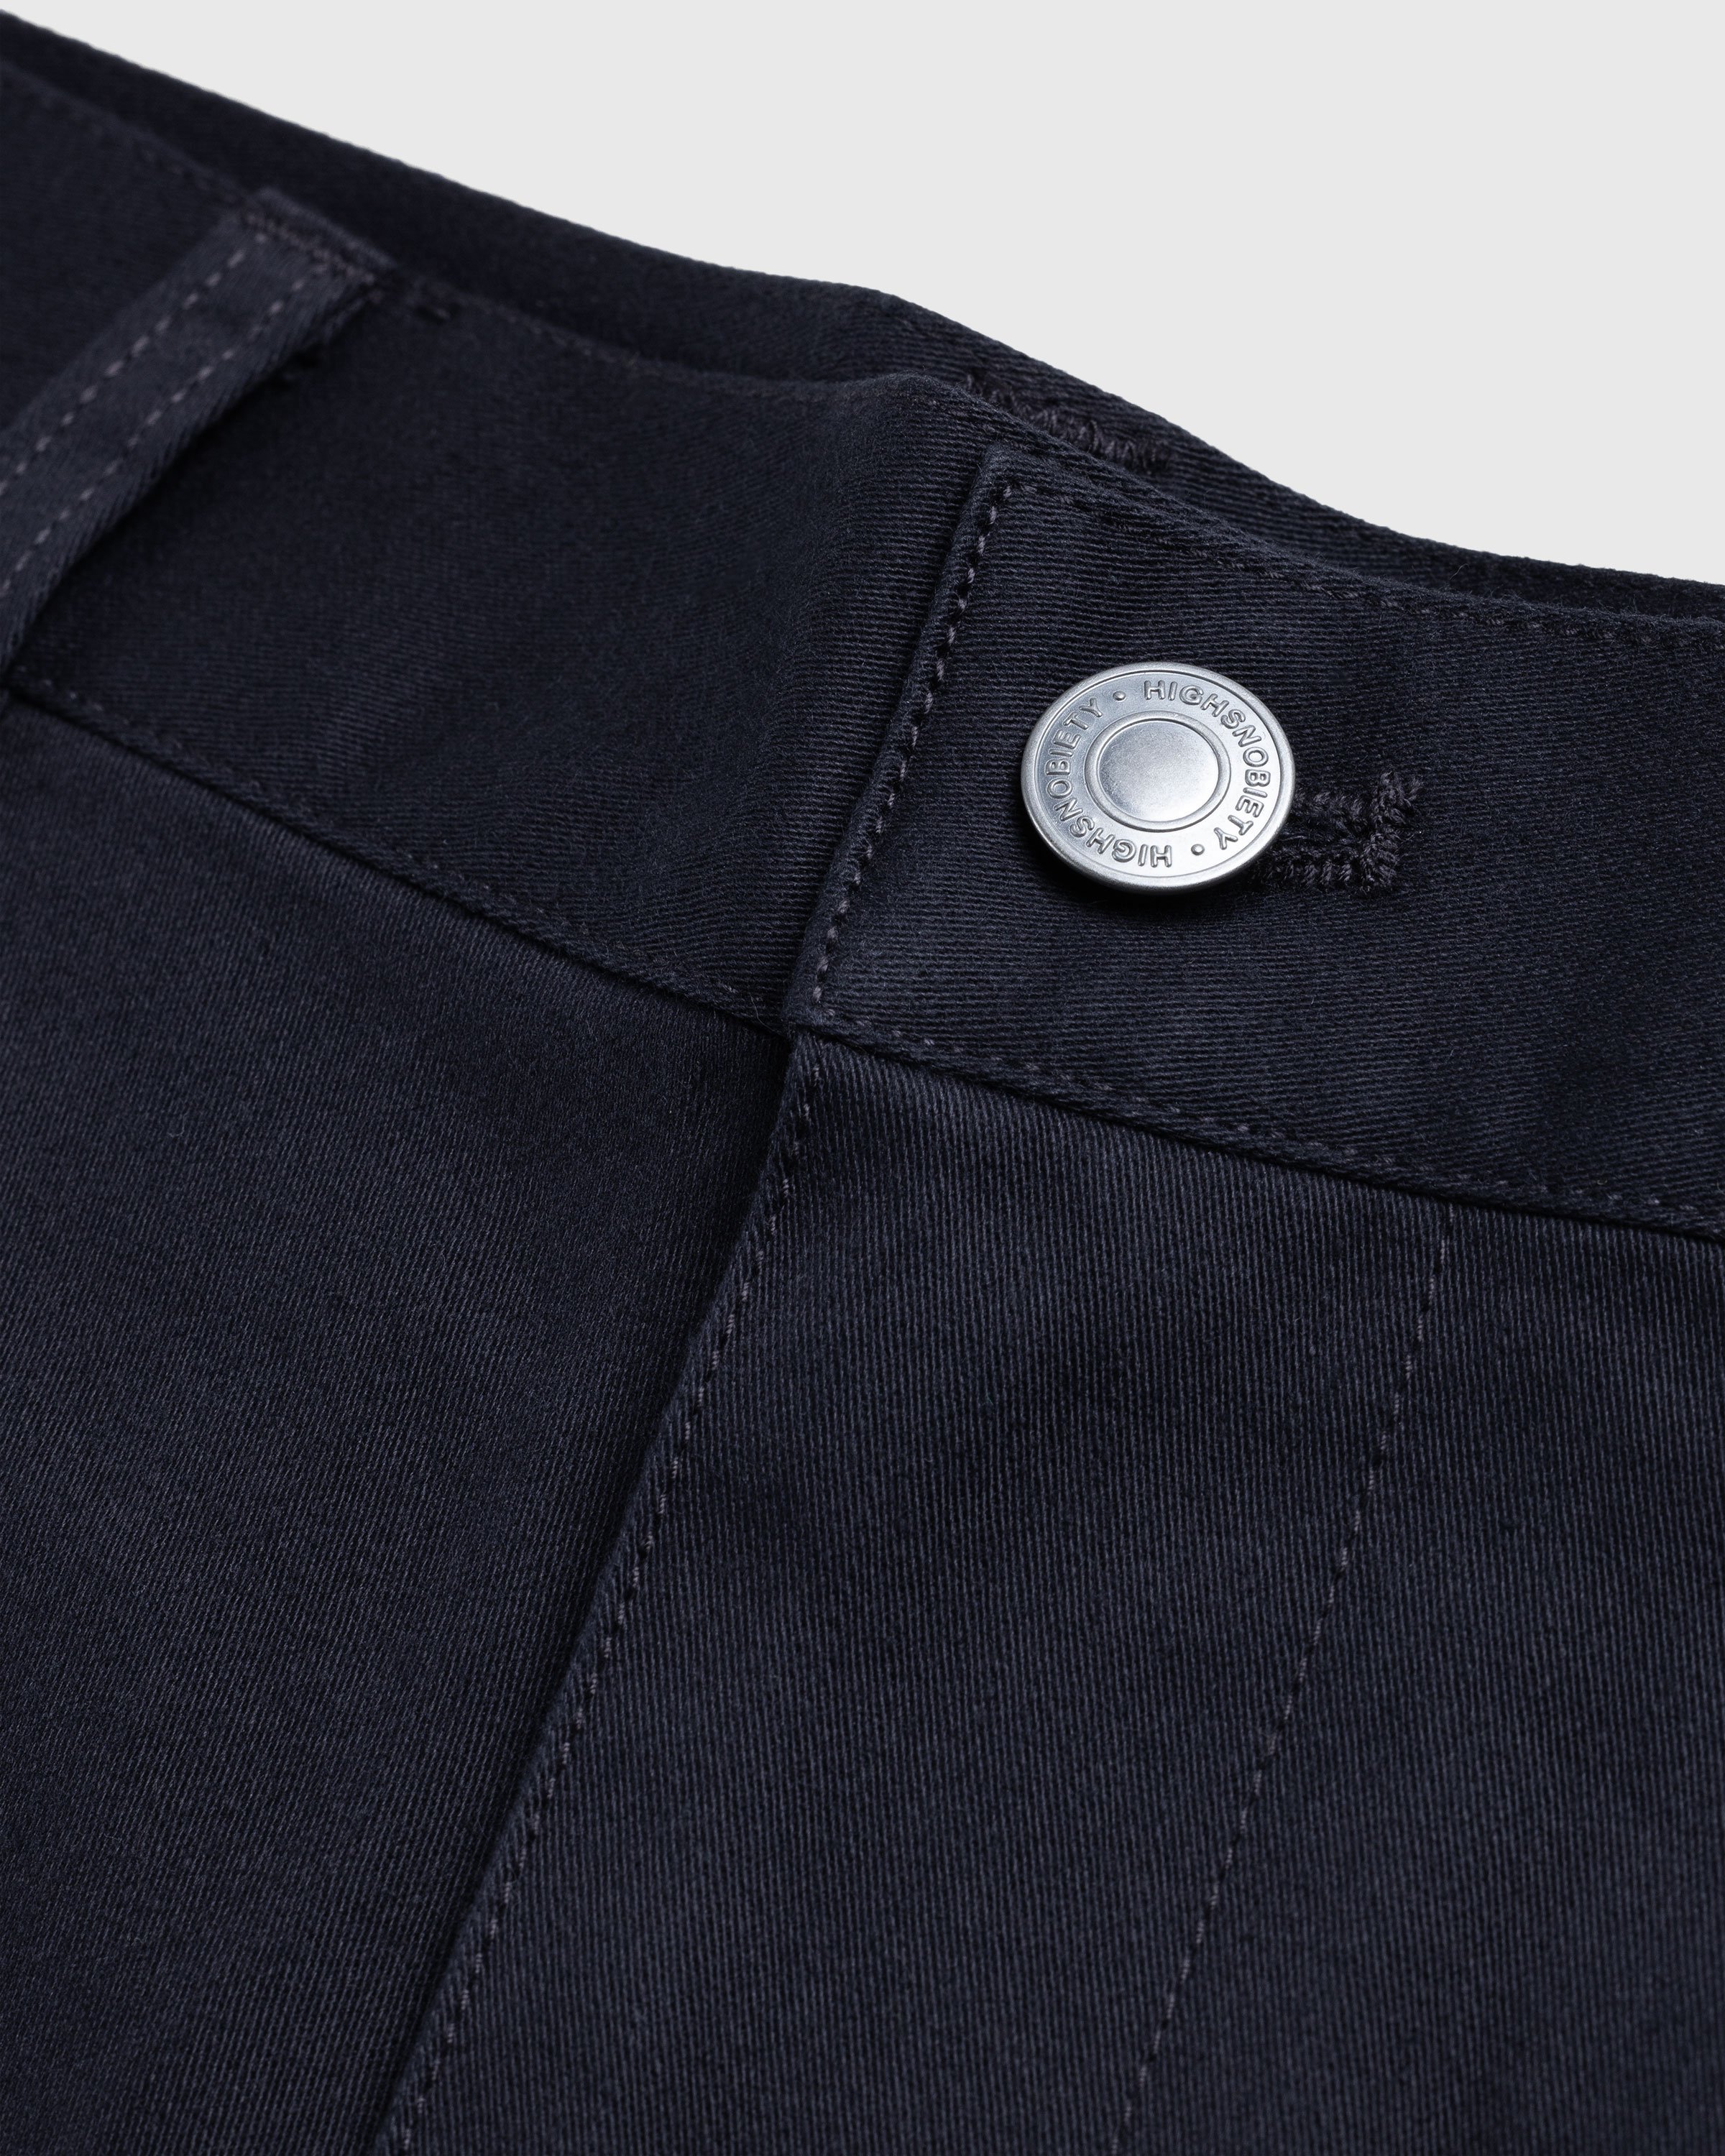 Highsnobiety HS05 - Reverse Twill Baggy Trouser Black - Clothing - Black - Image 6